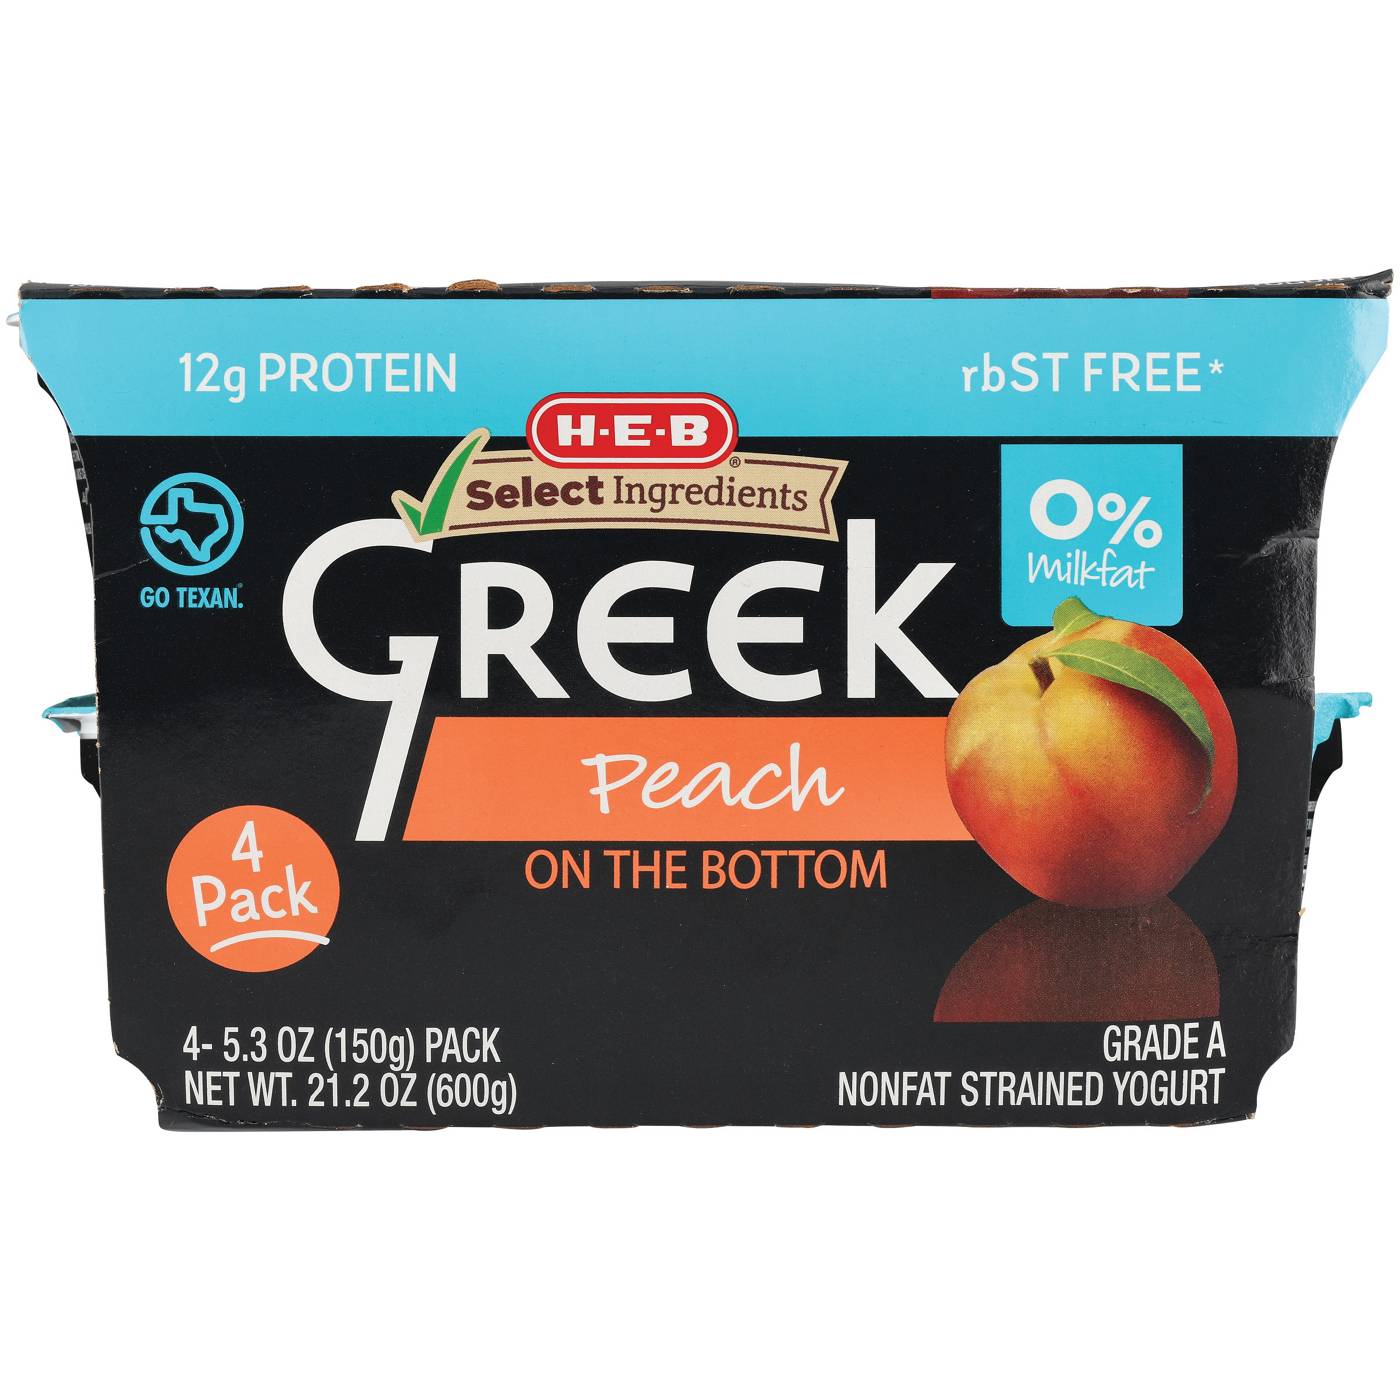 H-E-B Non-Fat Peach on the Bottom Greek Yogurt; image 1 of 2